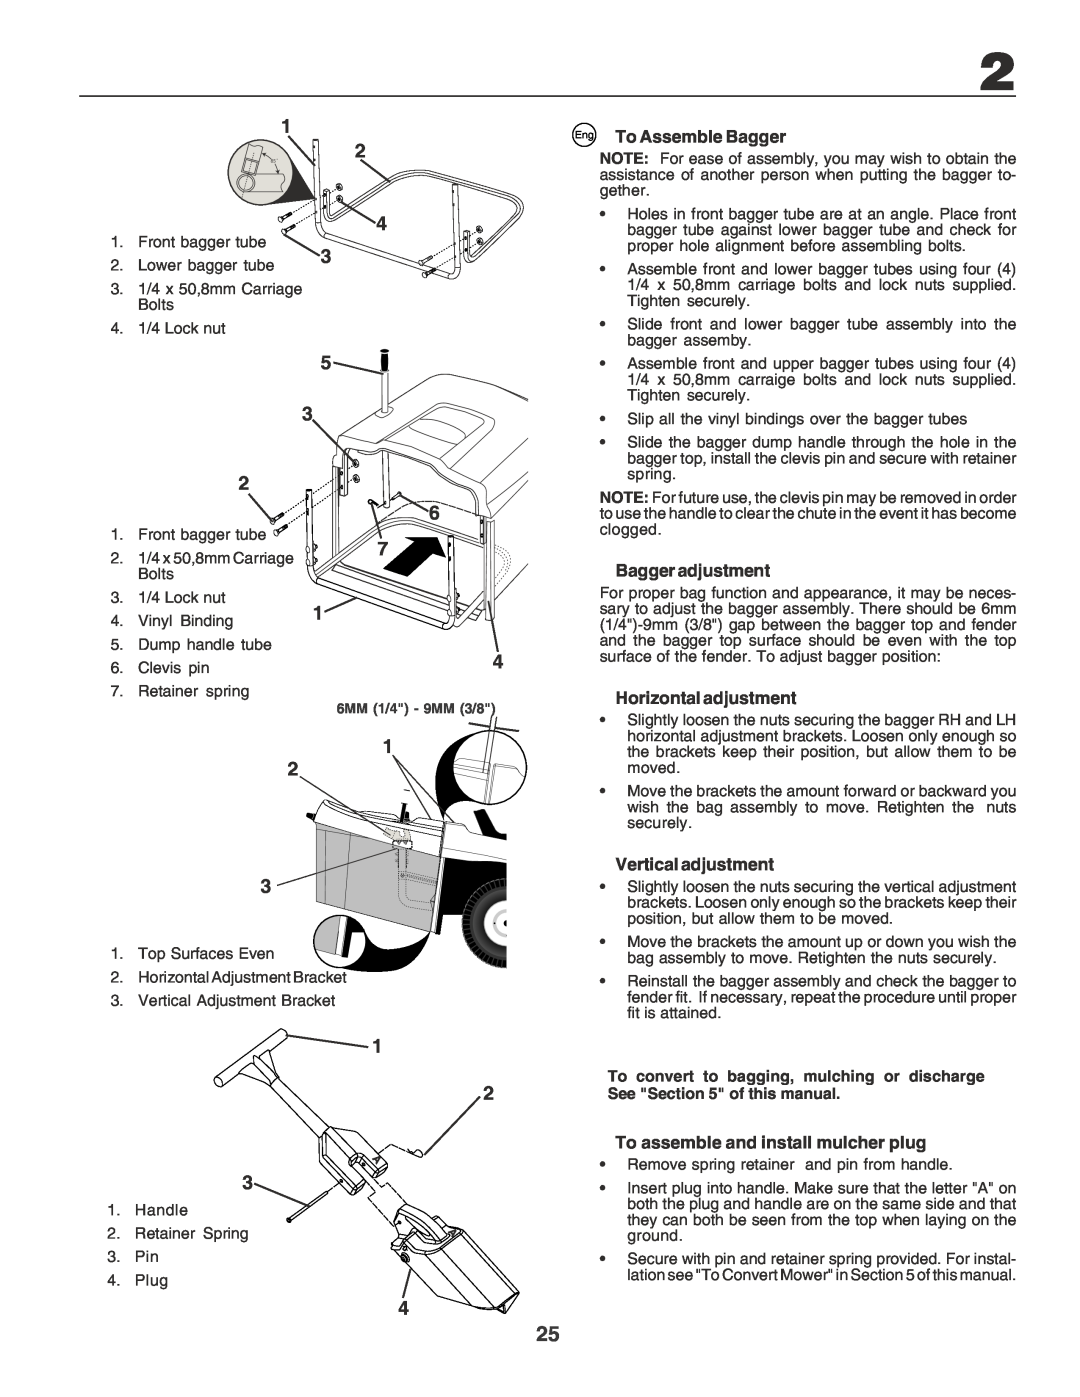 Husqvarna CTH170 instruction manual Eng To Assemble Bagger, Bagger adjustment, Horizontal adjustment, Vertical adjustment 